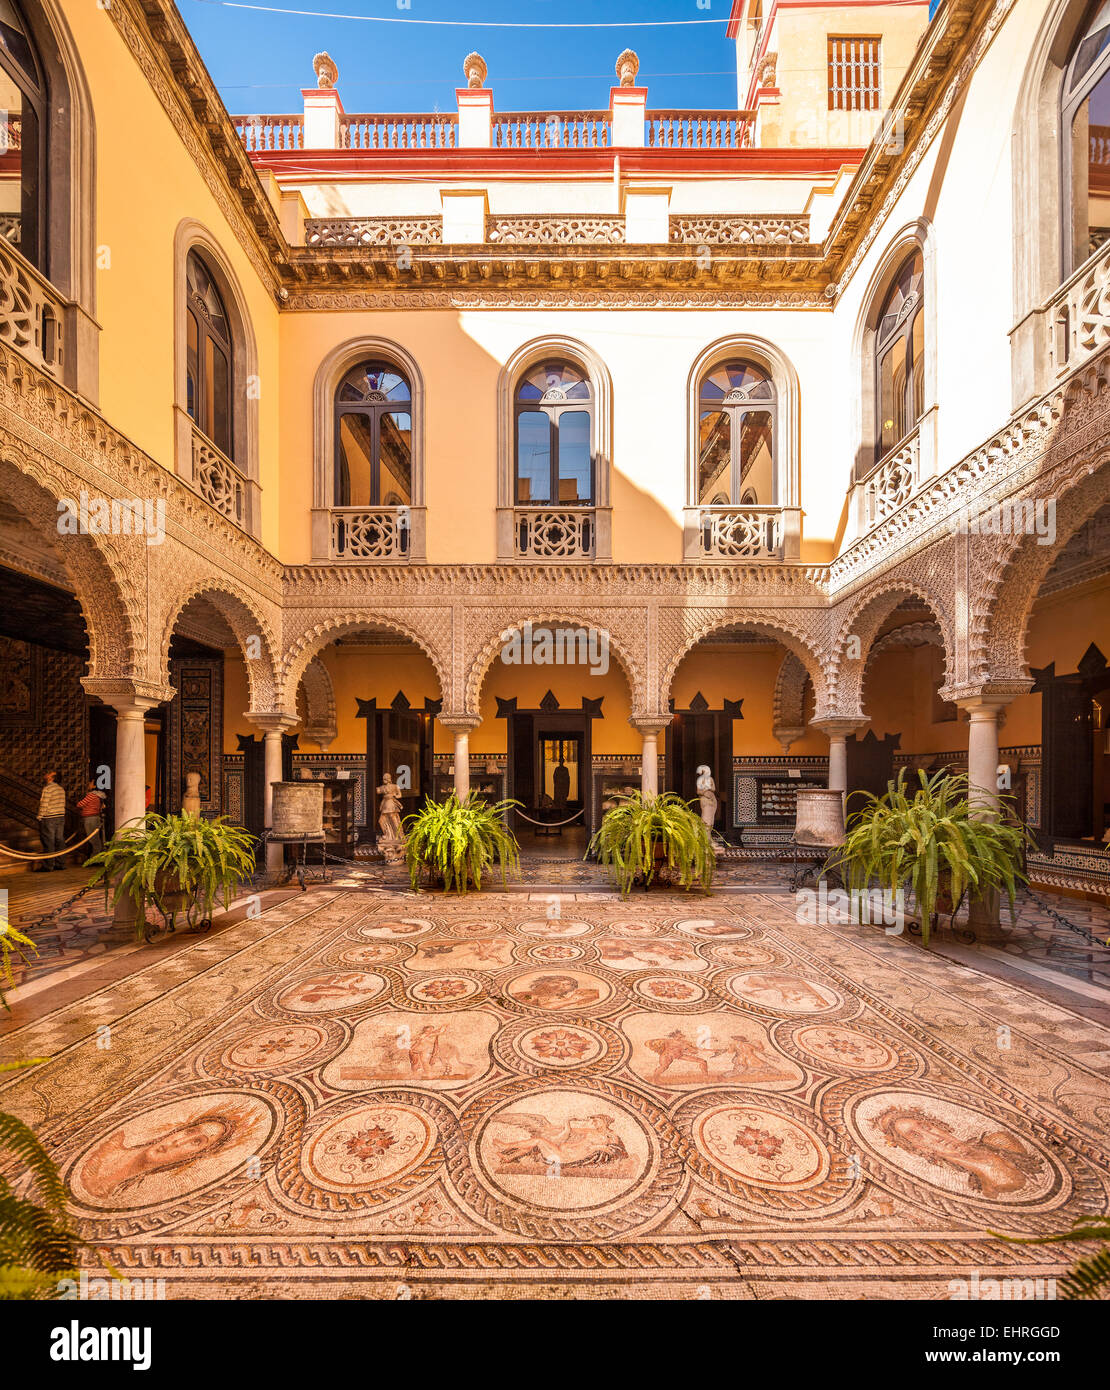 Seville Spain, courtyard with Roman mosaics. Sevilla, Palace of the Countess of Lebrija, Palacio de la Condesa de Lebrija. Stock Photo